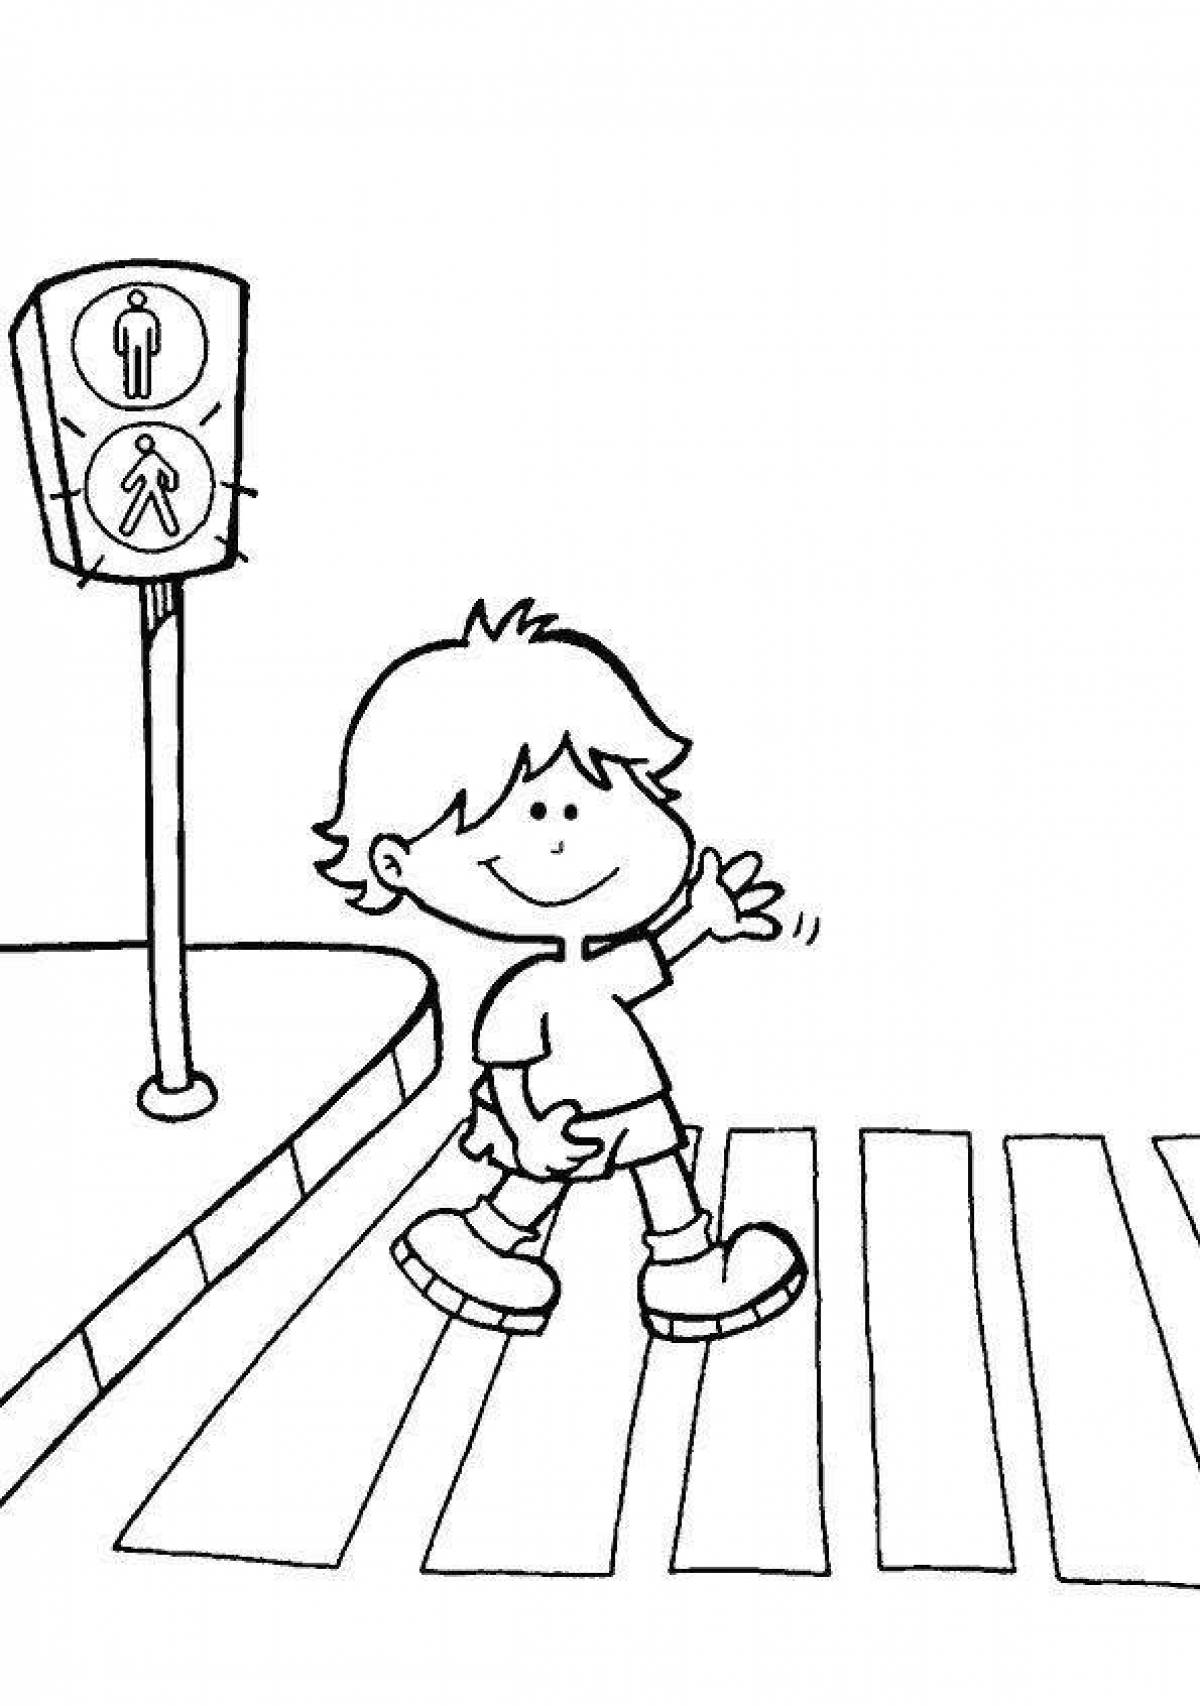 Educational coloring book traffic rules for preschoolers